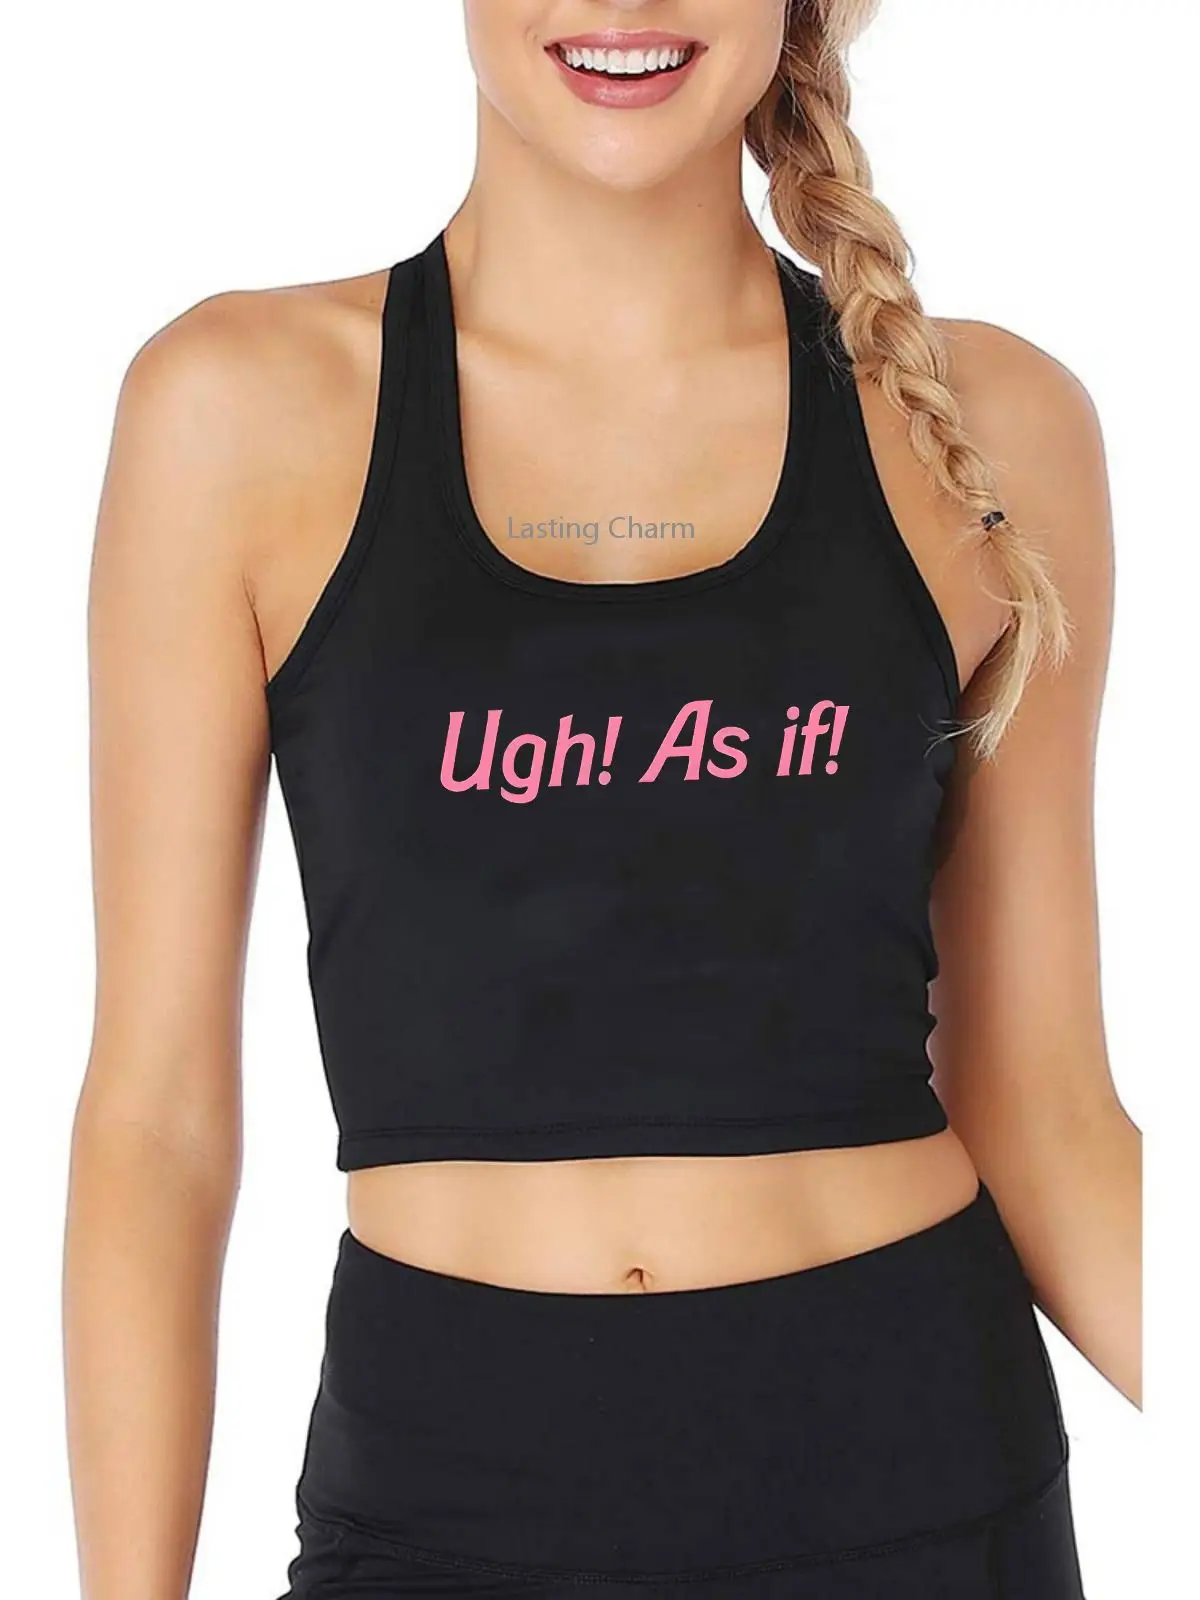 

Ugh! As If! Clueless Print Tank Top Women's Yoga Sports Workout Crop Top Gym Tee